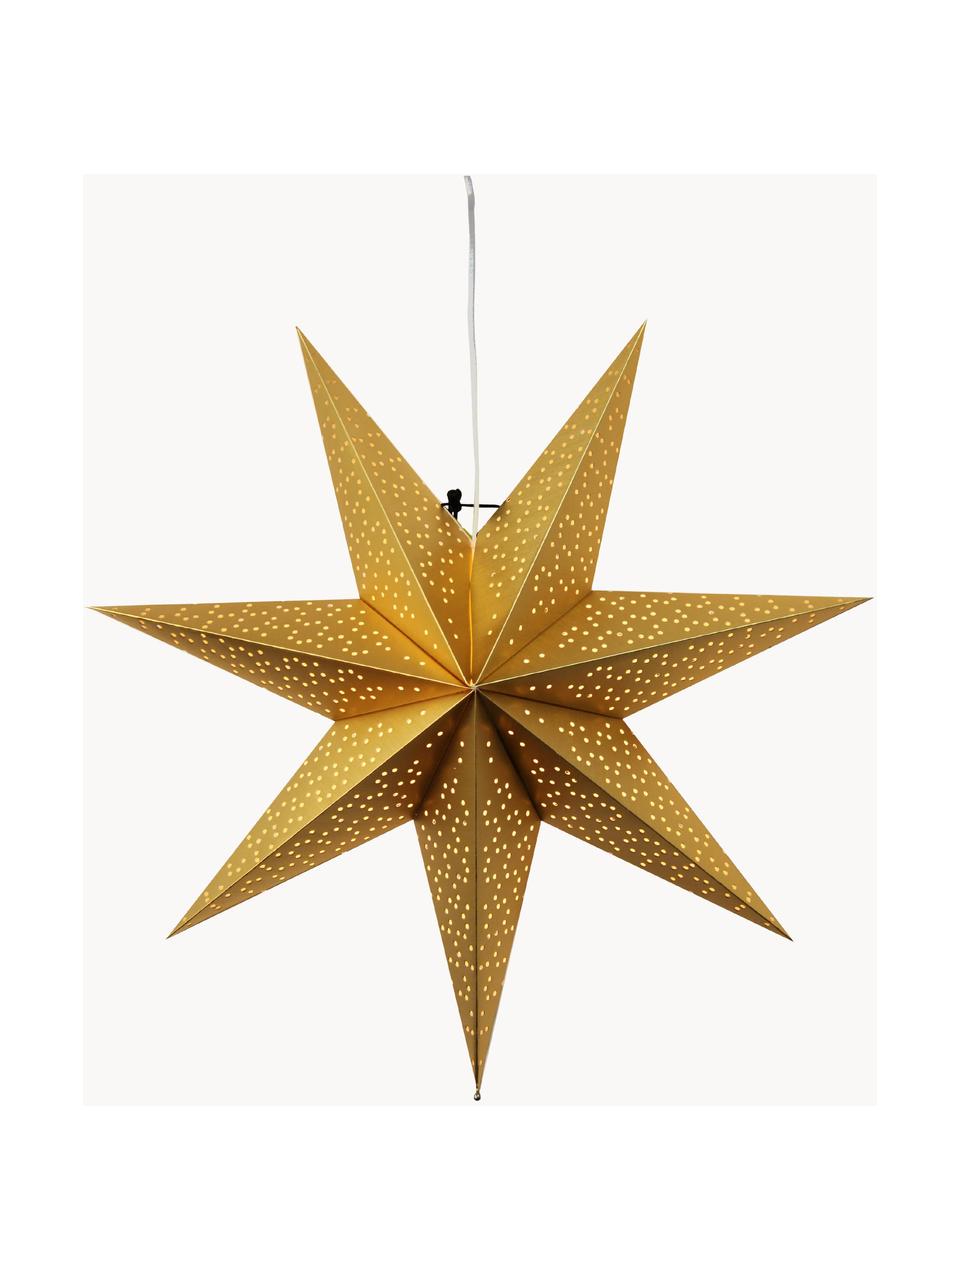 Lichtgevende ster Dot van papier, met stekker, Goudkleurig, Ø 70 cm